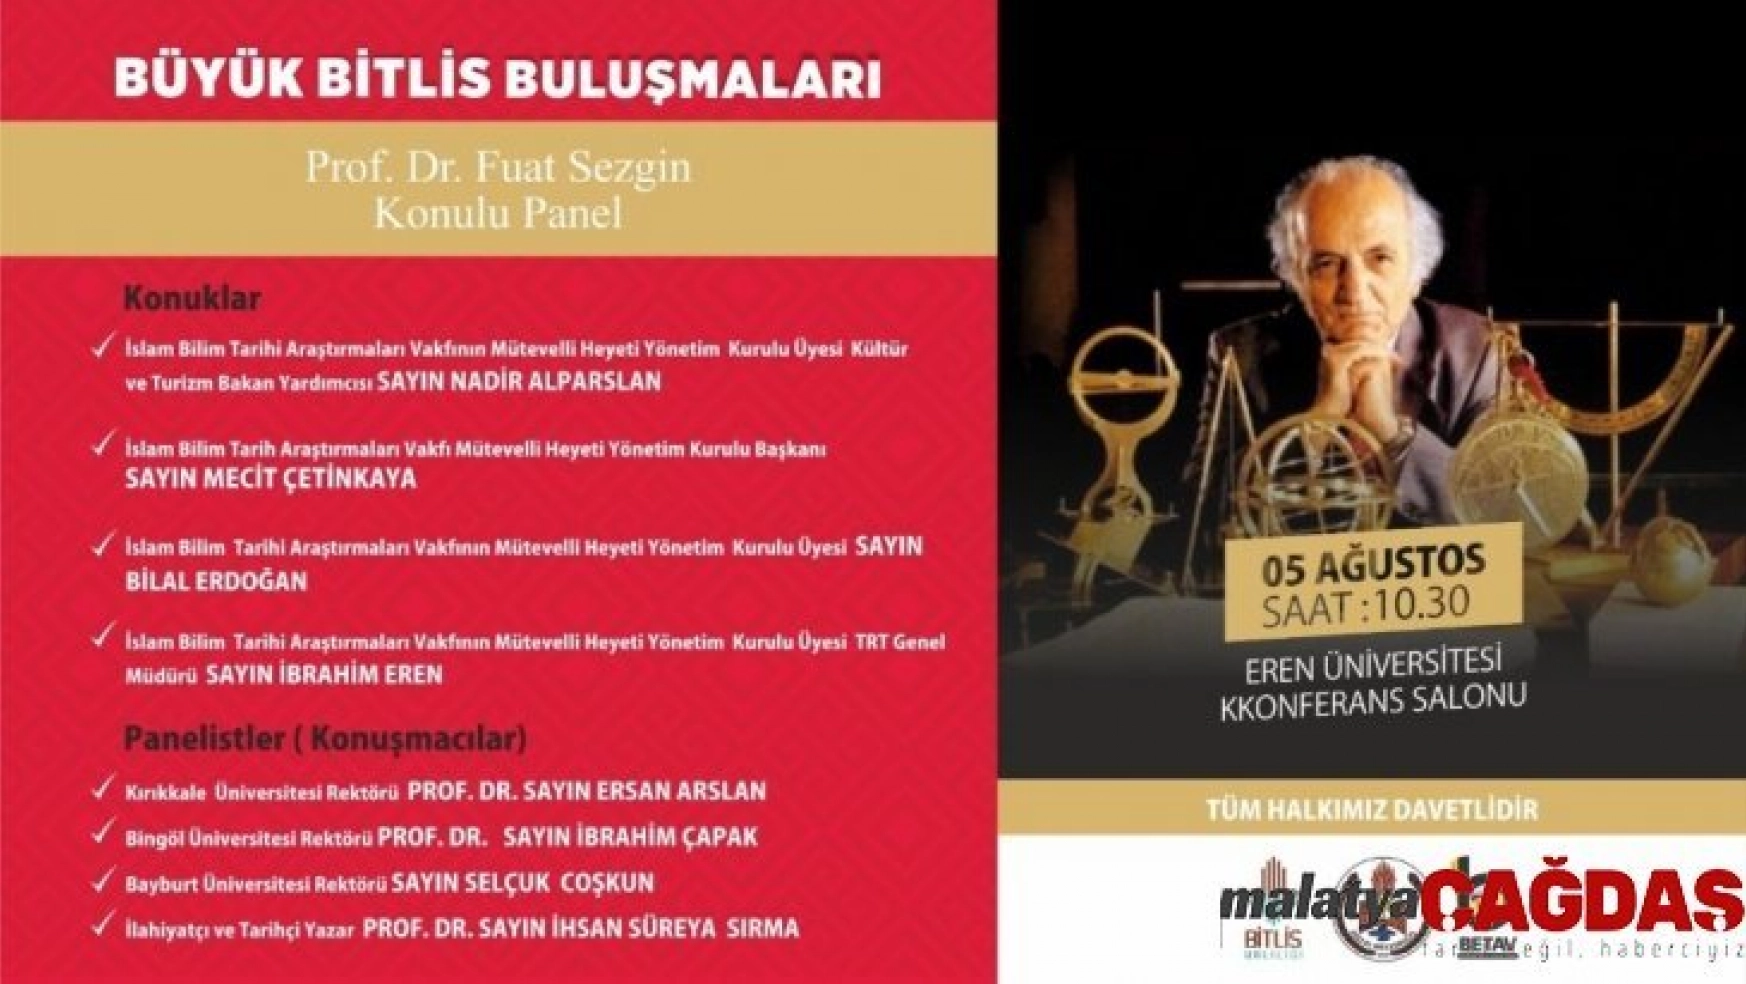 Bitlis'te Prof. Dr. Fuat Sezgin konulu panel düzenlenecek